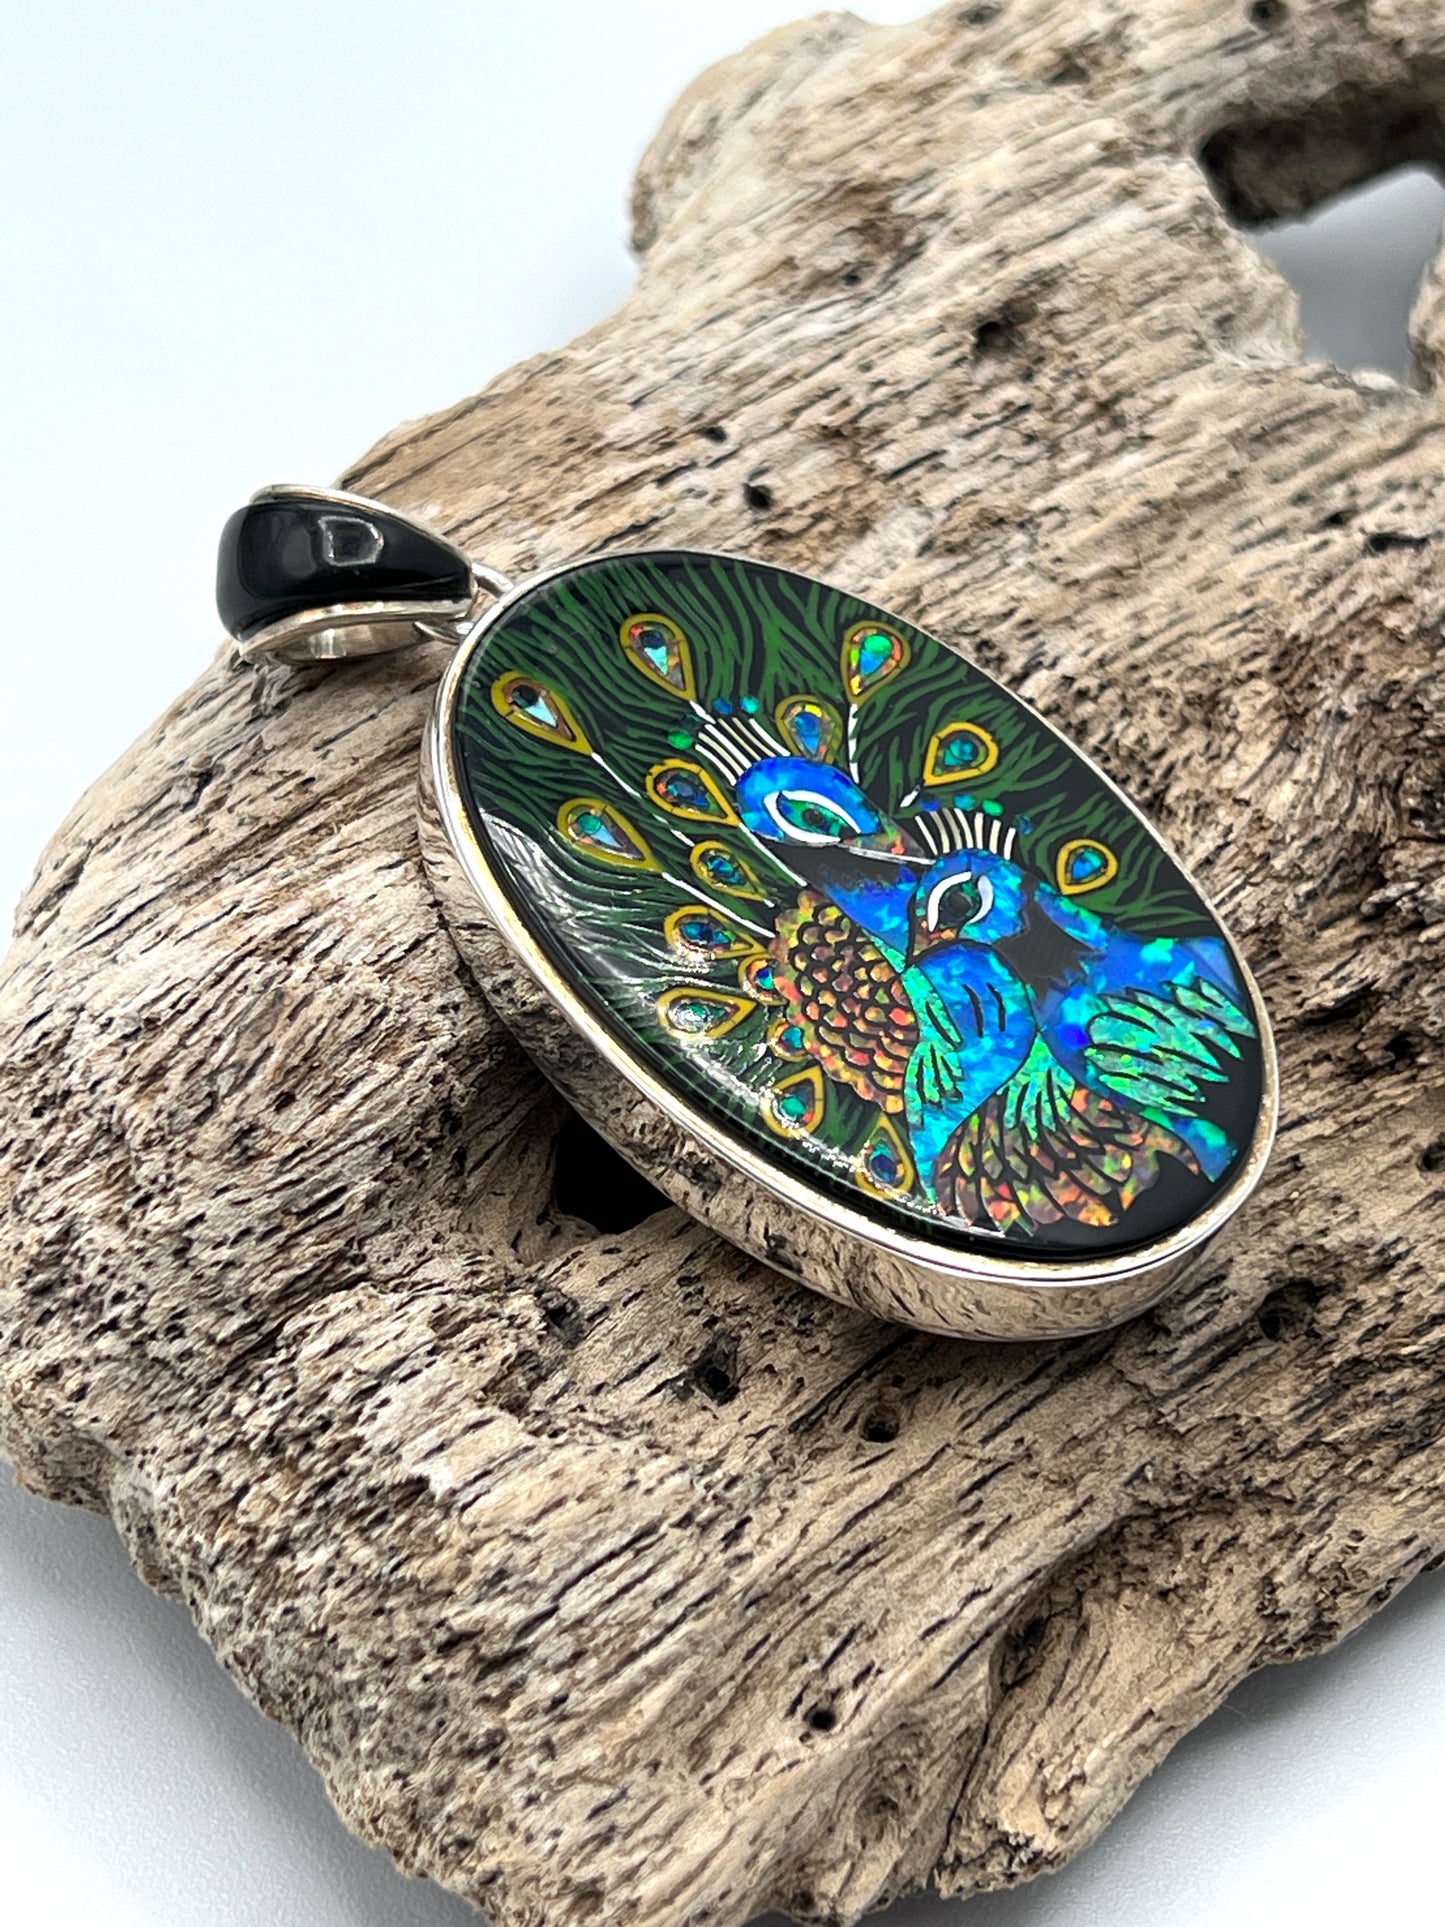 Rare Inlaid Gemstone Peacock Pendant by David Freeland